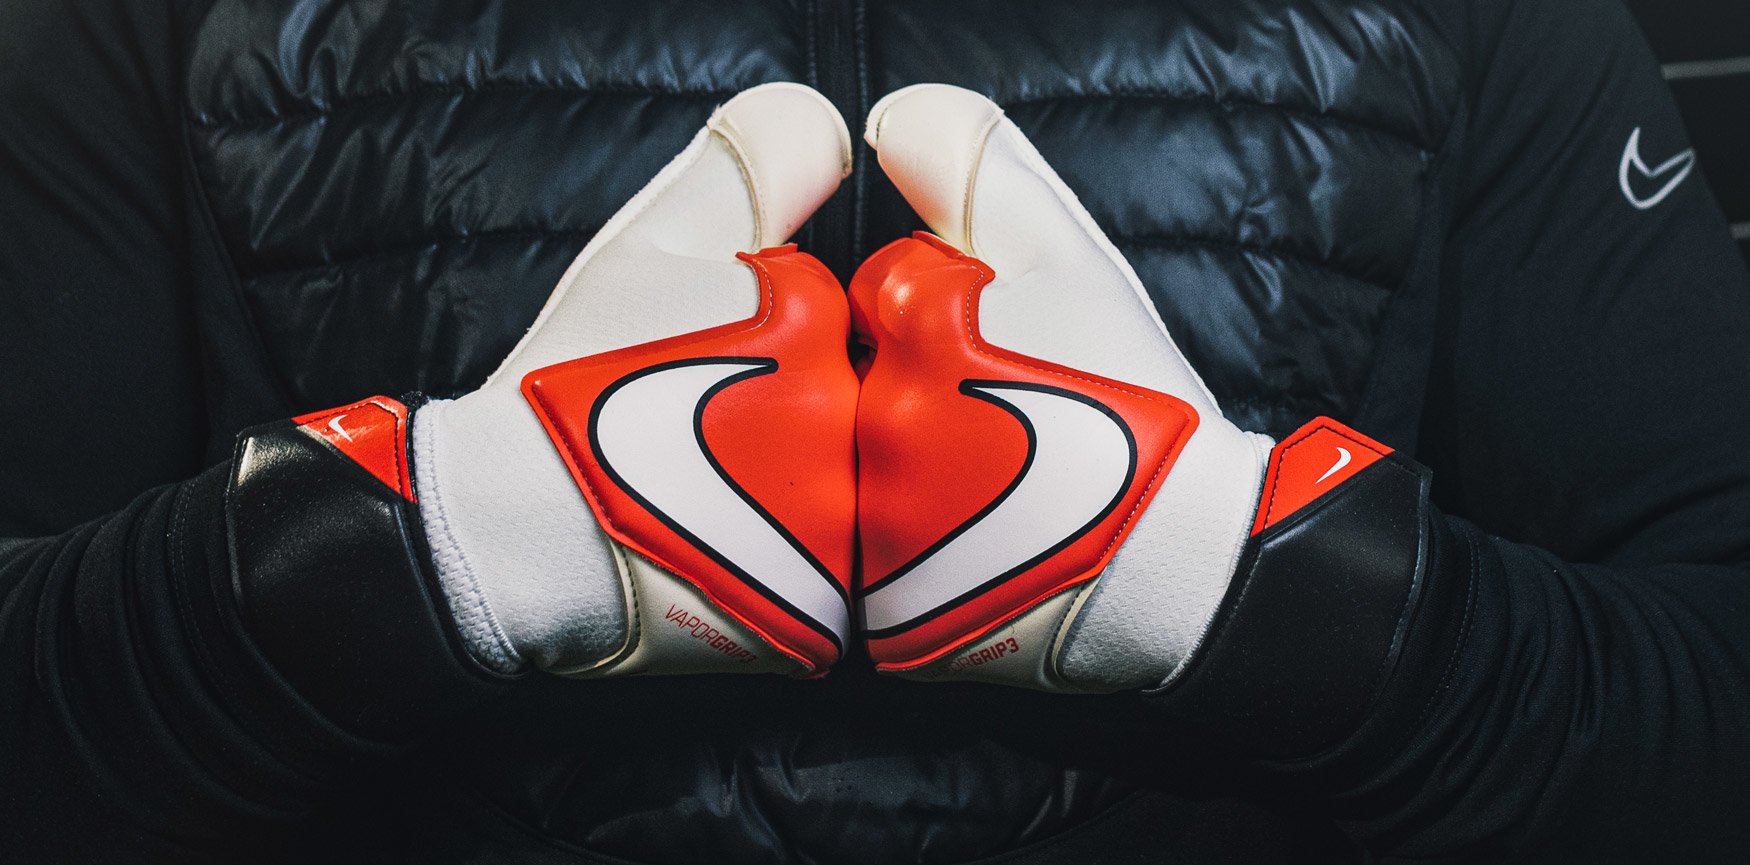 Nike Goalkeeper Gloves featuring the Nike Mercurial Vapor Grip